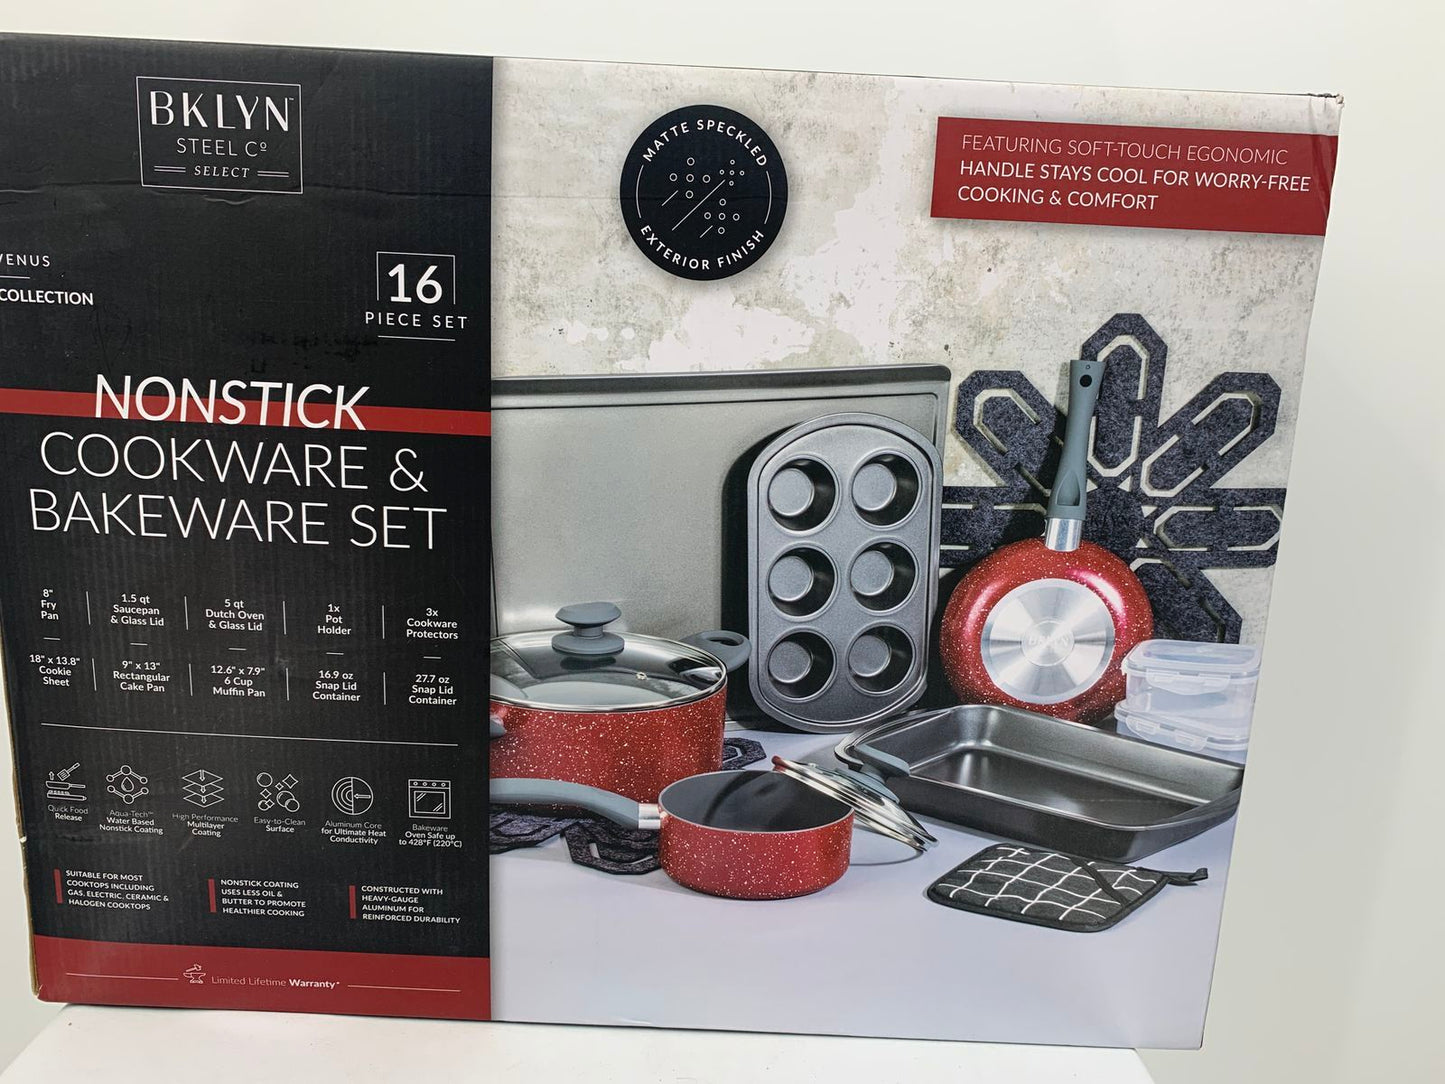 Venus Collection Bklyn Steel Co Red 16 Piece Nonstick Cookware & Bakeware Set